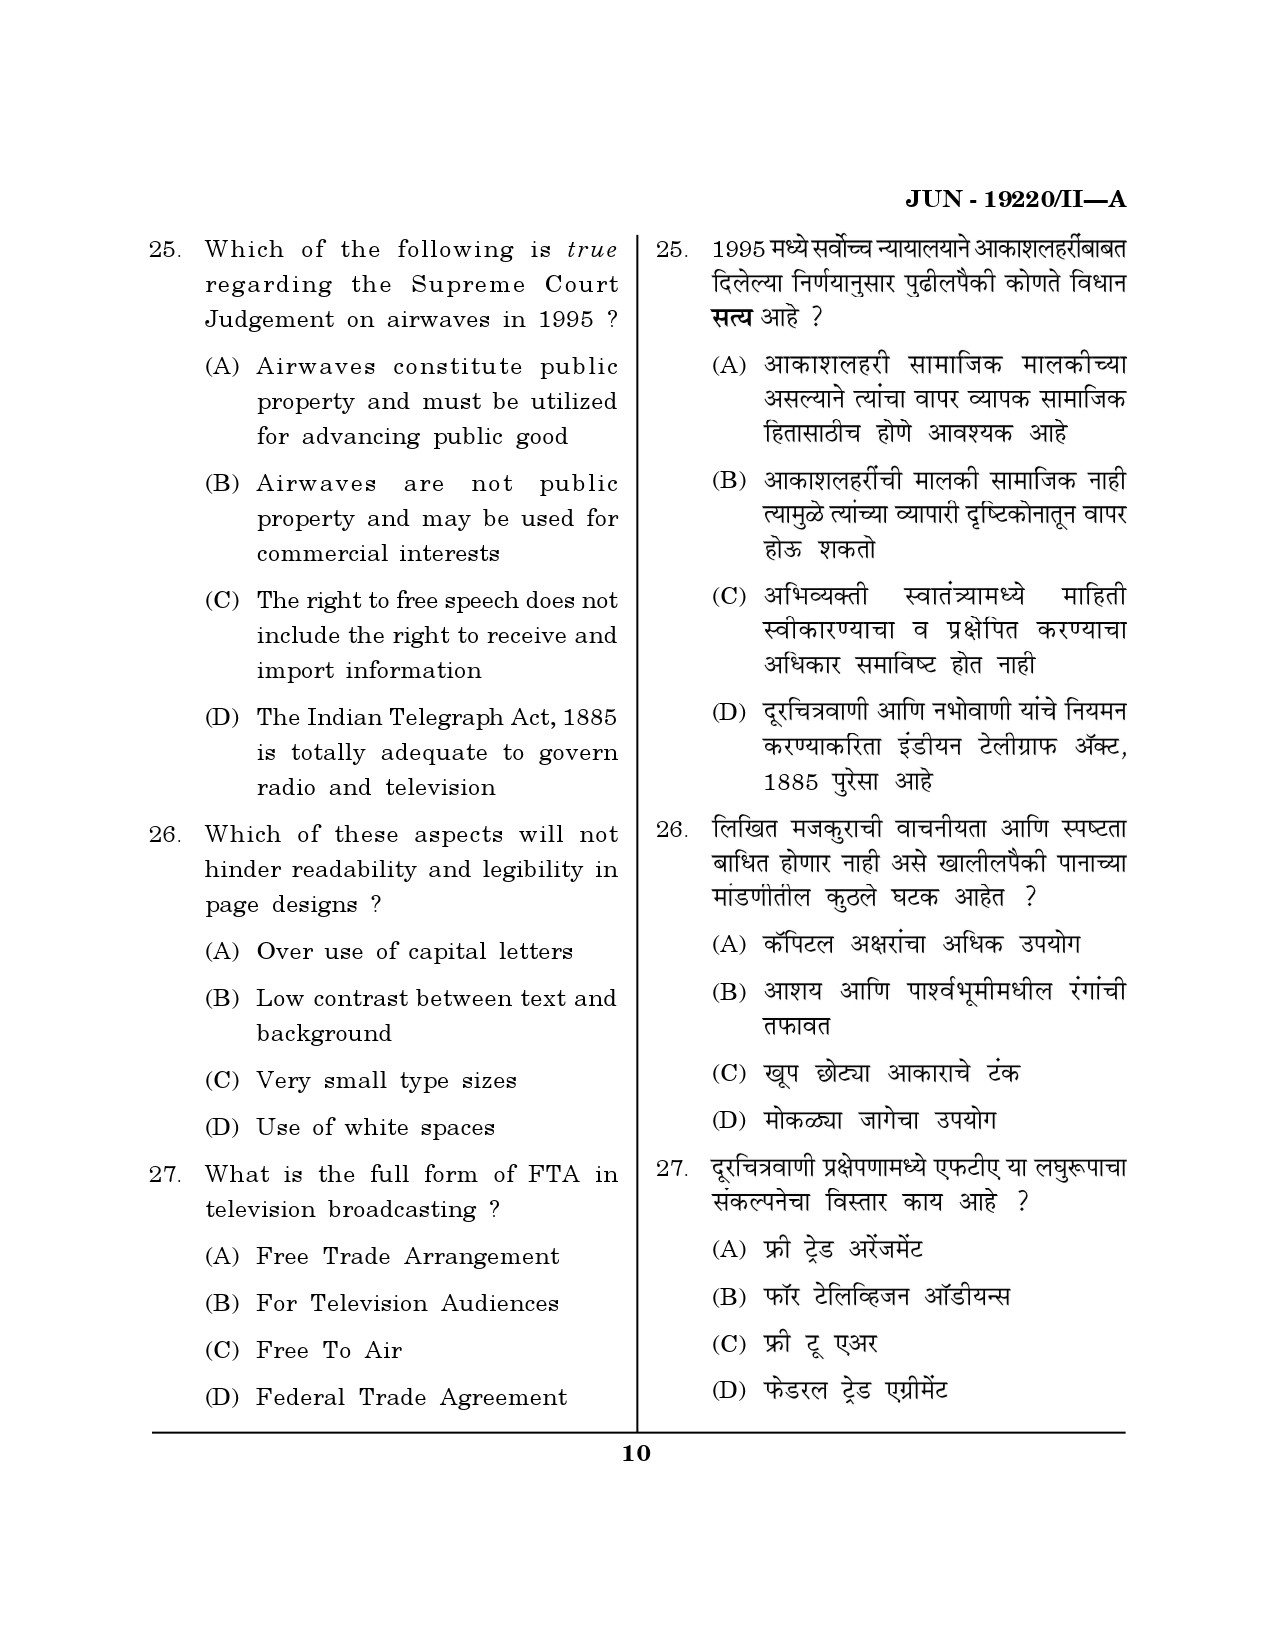 Maharashtra SET Journalism and Mass Communication Question Paper II June 2020 9